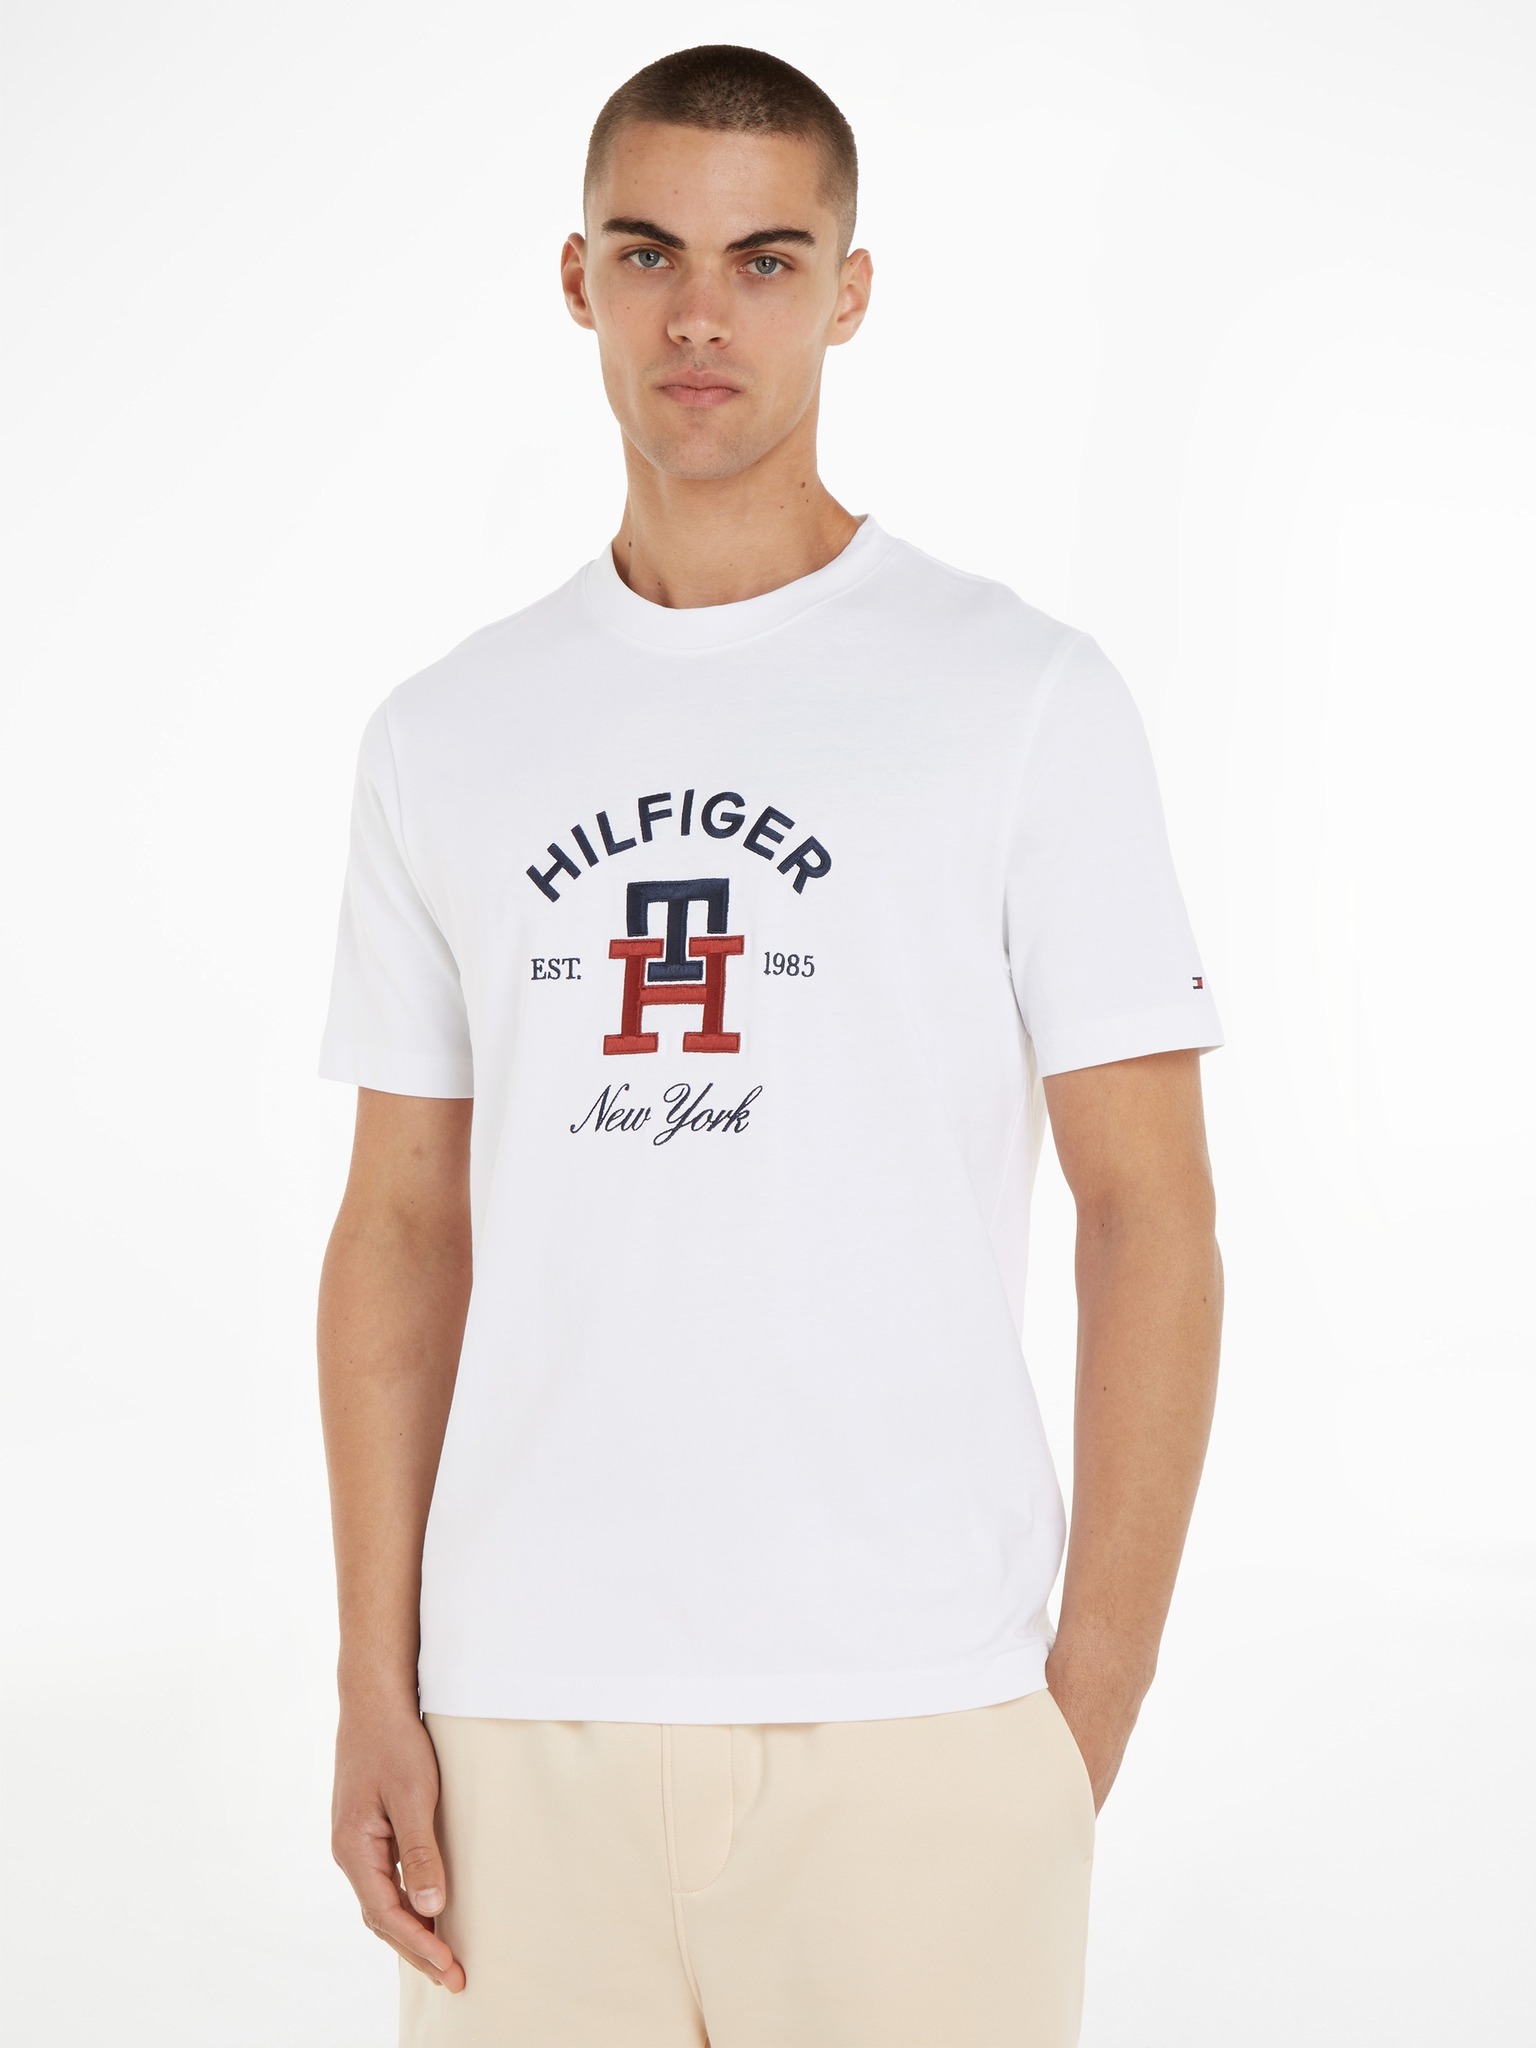 incompleet Overeenstemming Toegeven Tommy Hilfiger - Curved Monogram T-shirt Bibloo.com